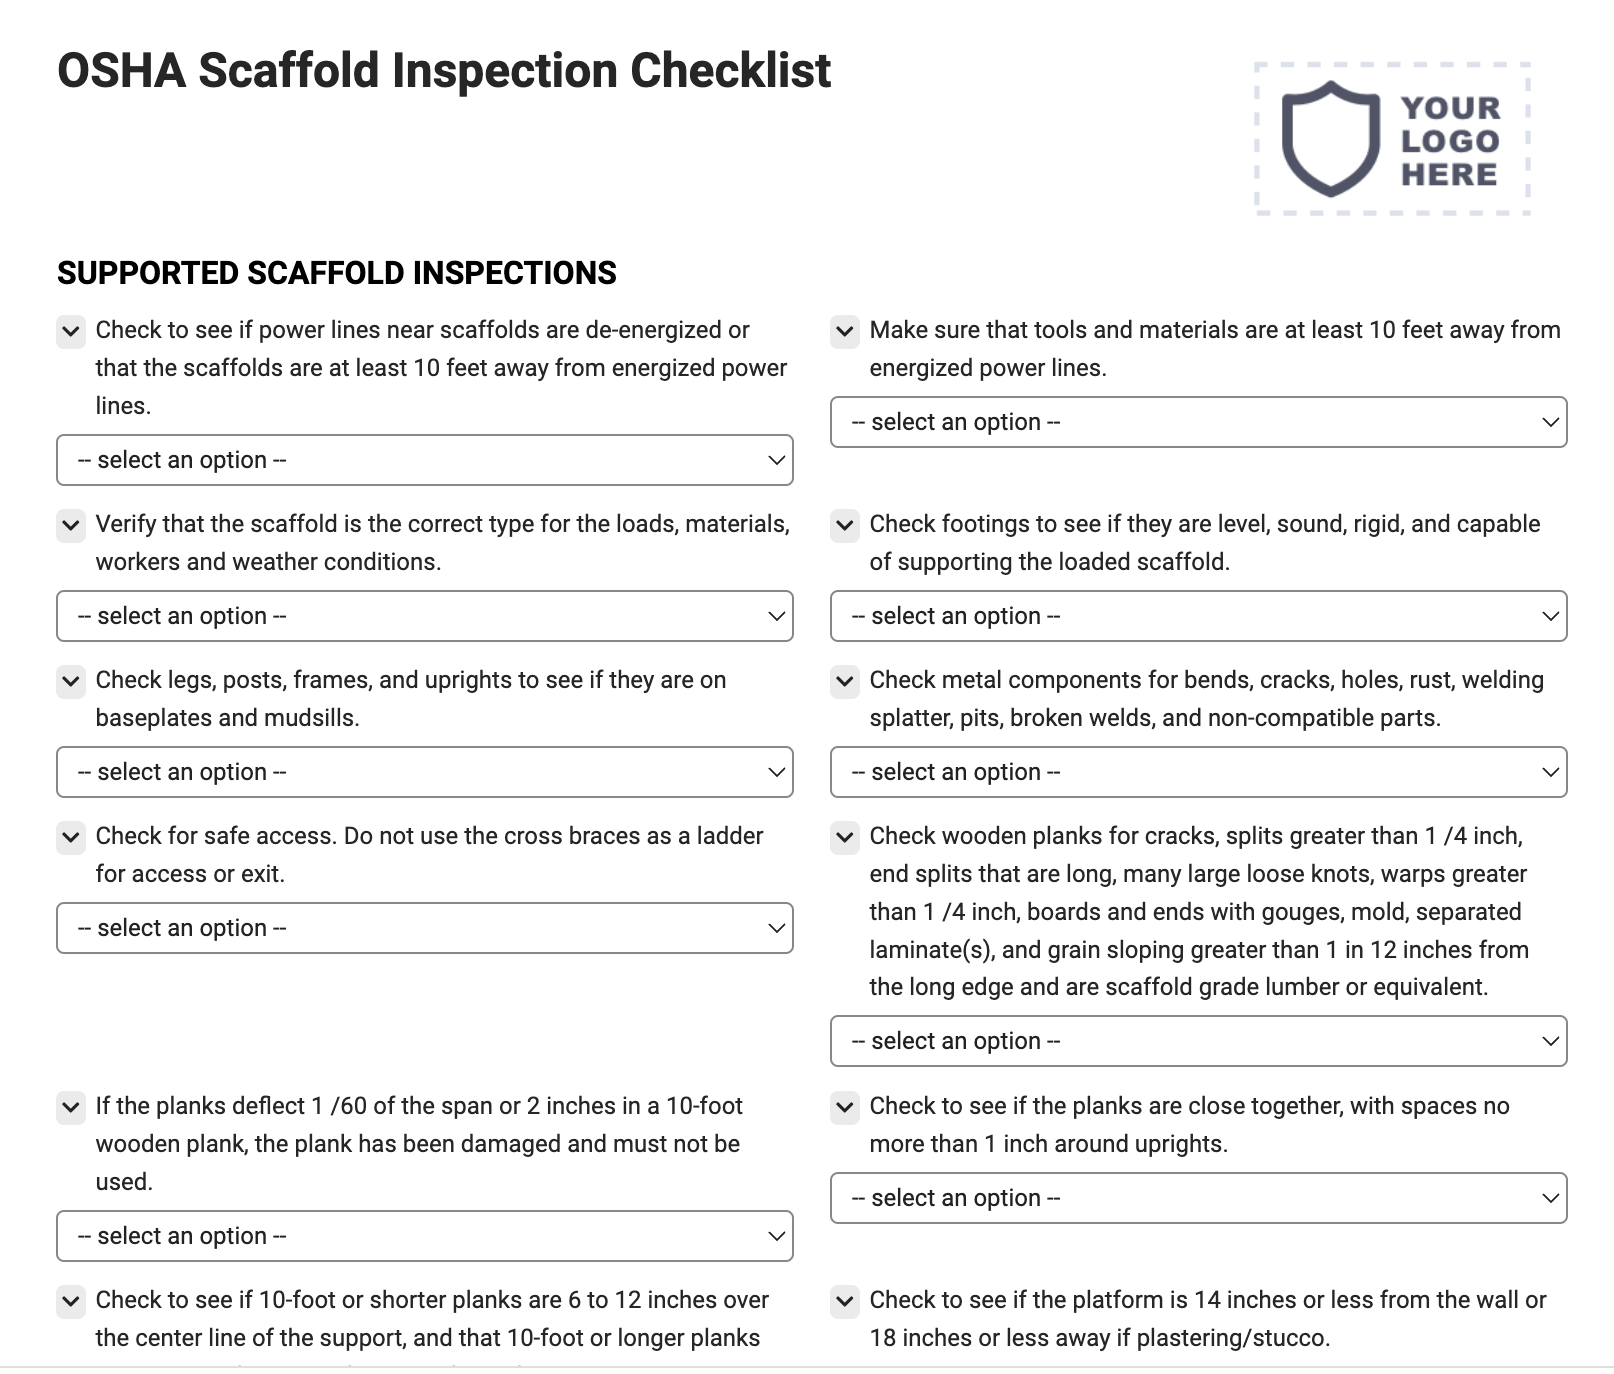 OSHA Scaffold Inspection Checklist